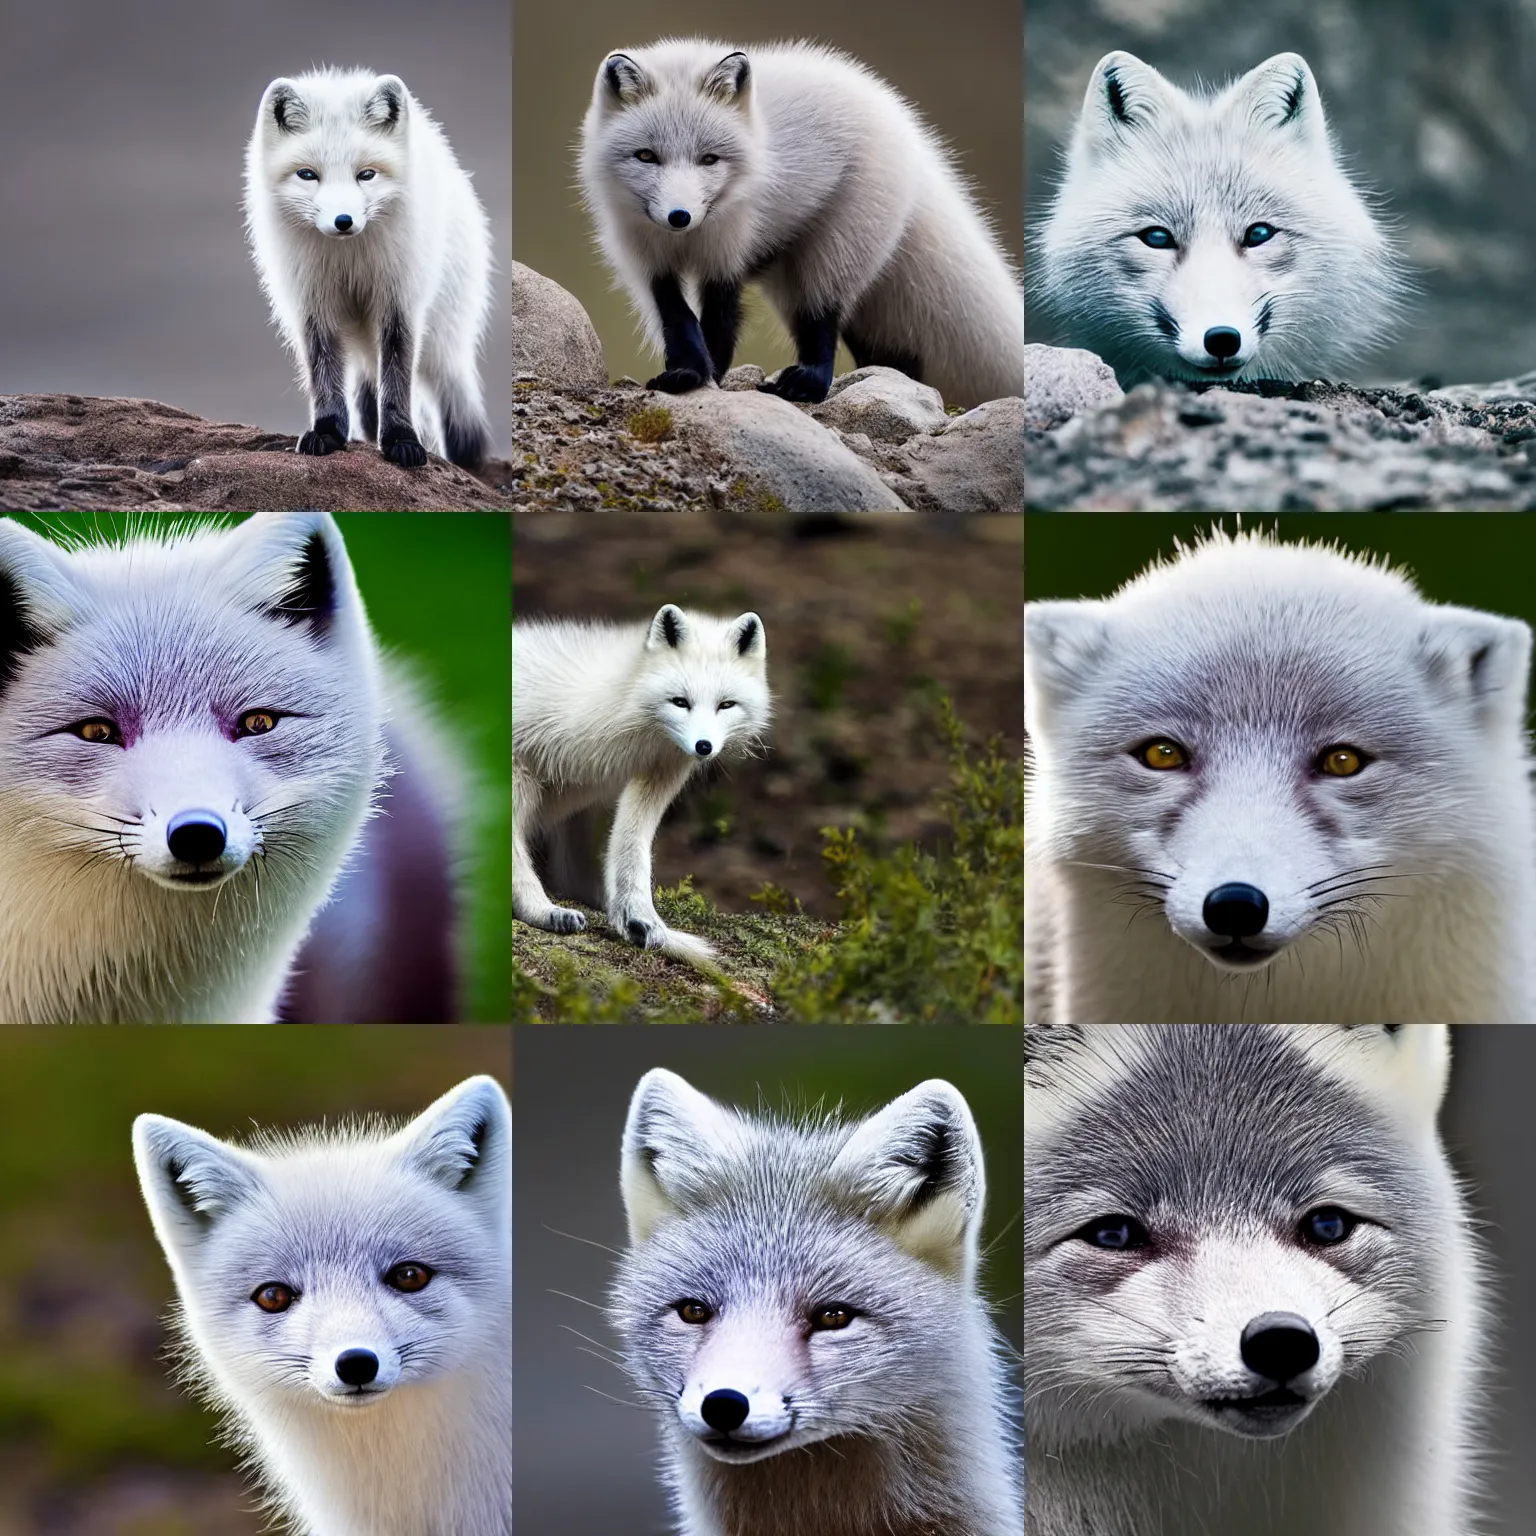 Prompt: beautiful arctic fox close-up, XF IQ4, 150MP, 50mm, f/1.4, ISO 200, 1/160s, natural light, Adobe Photoshop, Adobe Lightroom, DxO Photolab, Corel PaintShop Pro, symmetrical balance, depth layering, polarizing filter, Sense of Depth, AI enhanced